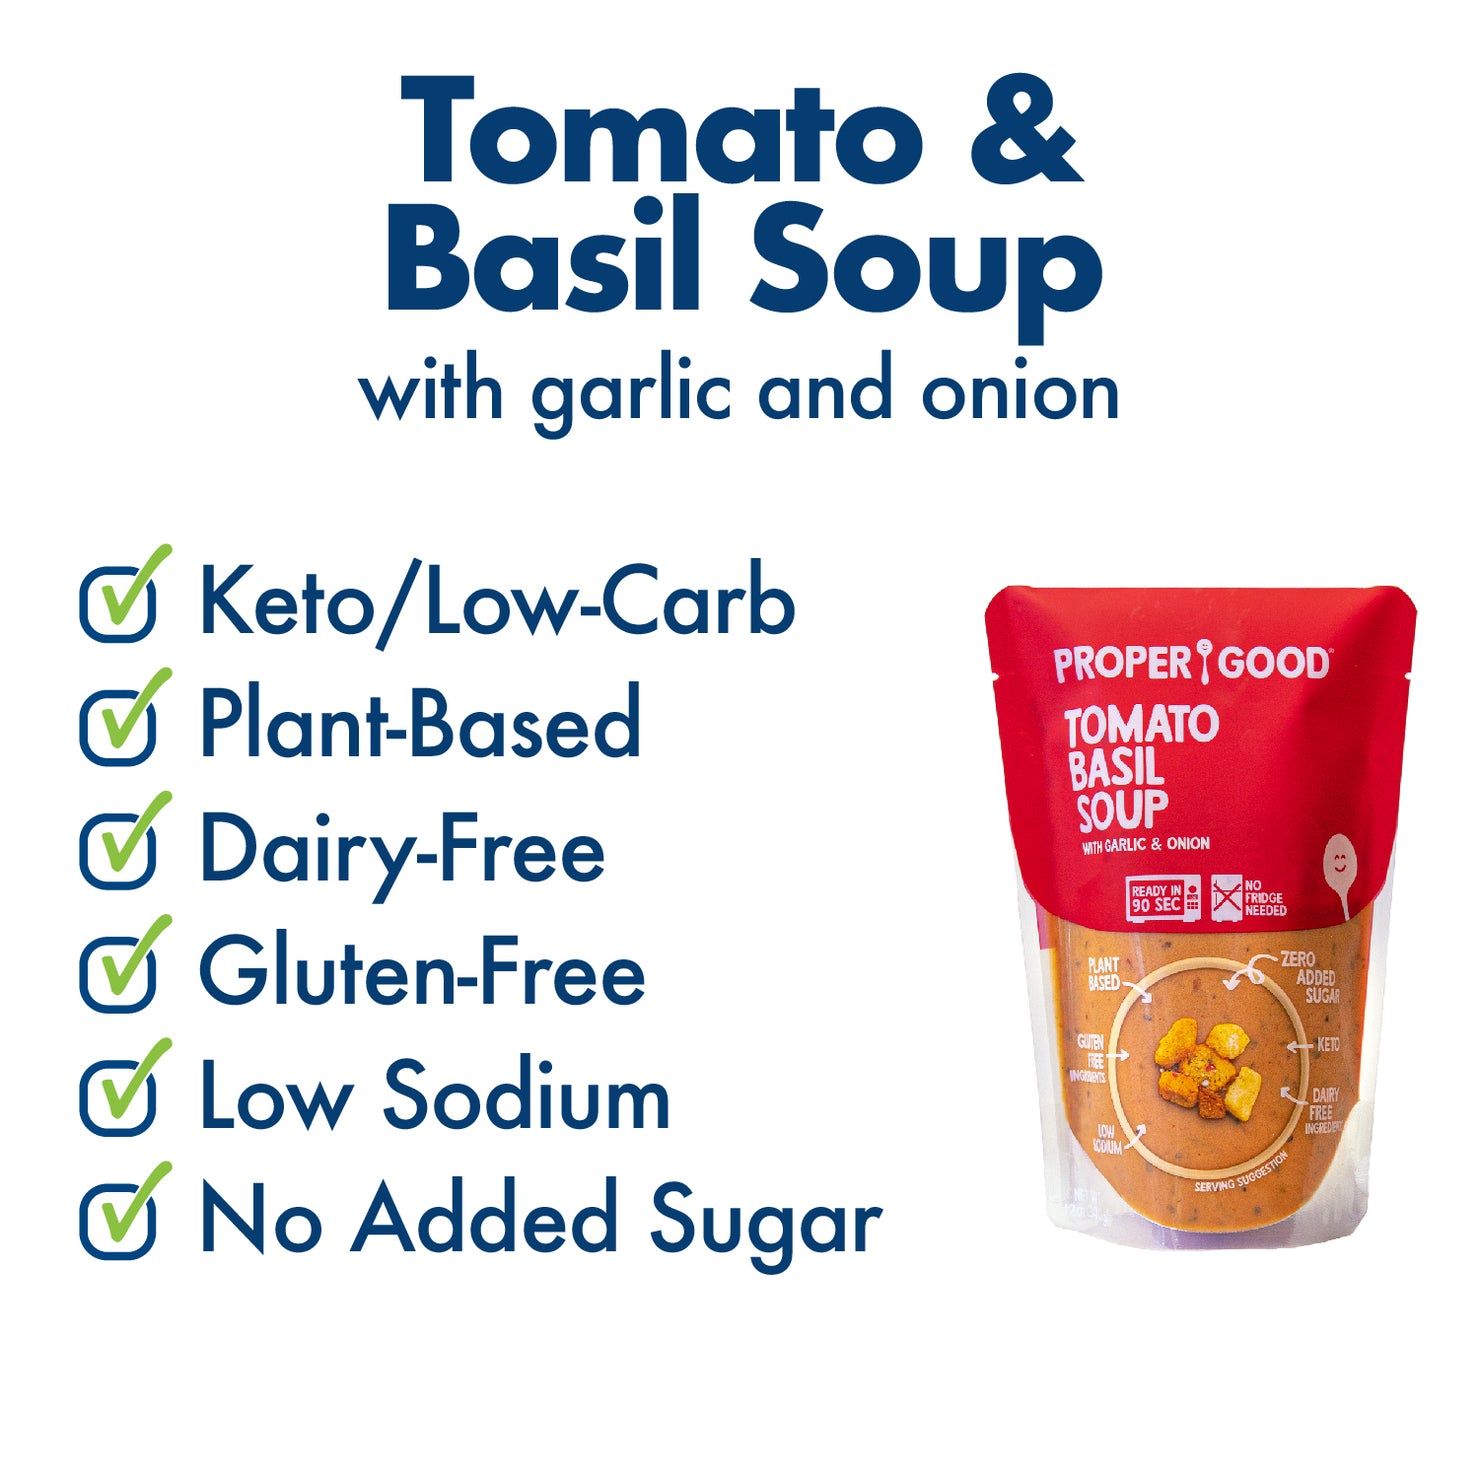 Tomato & Basil Soup Benefits - Eat Proper Good